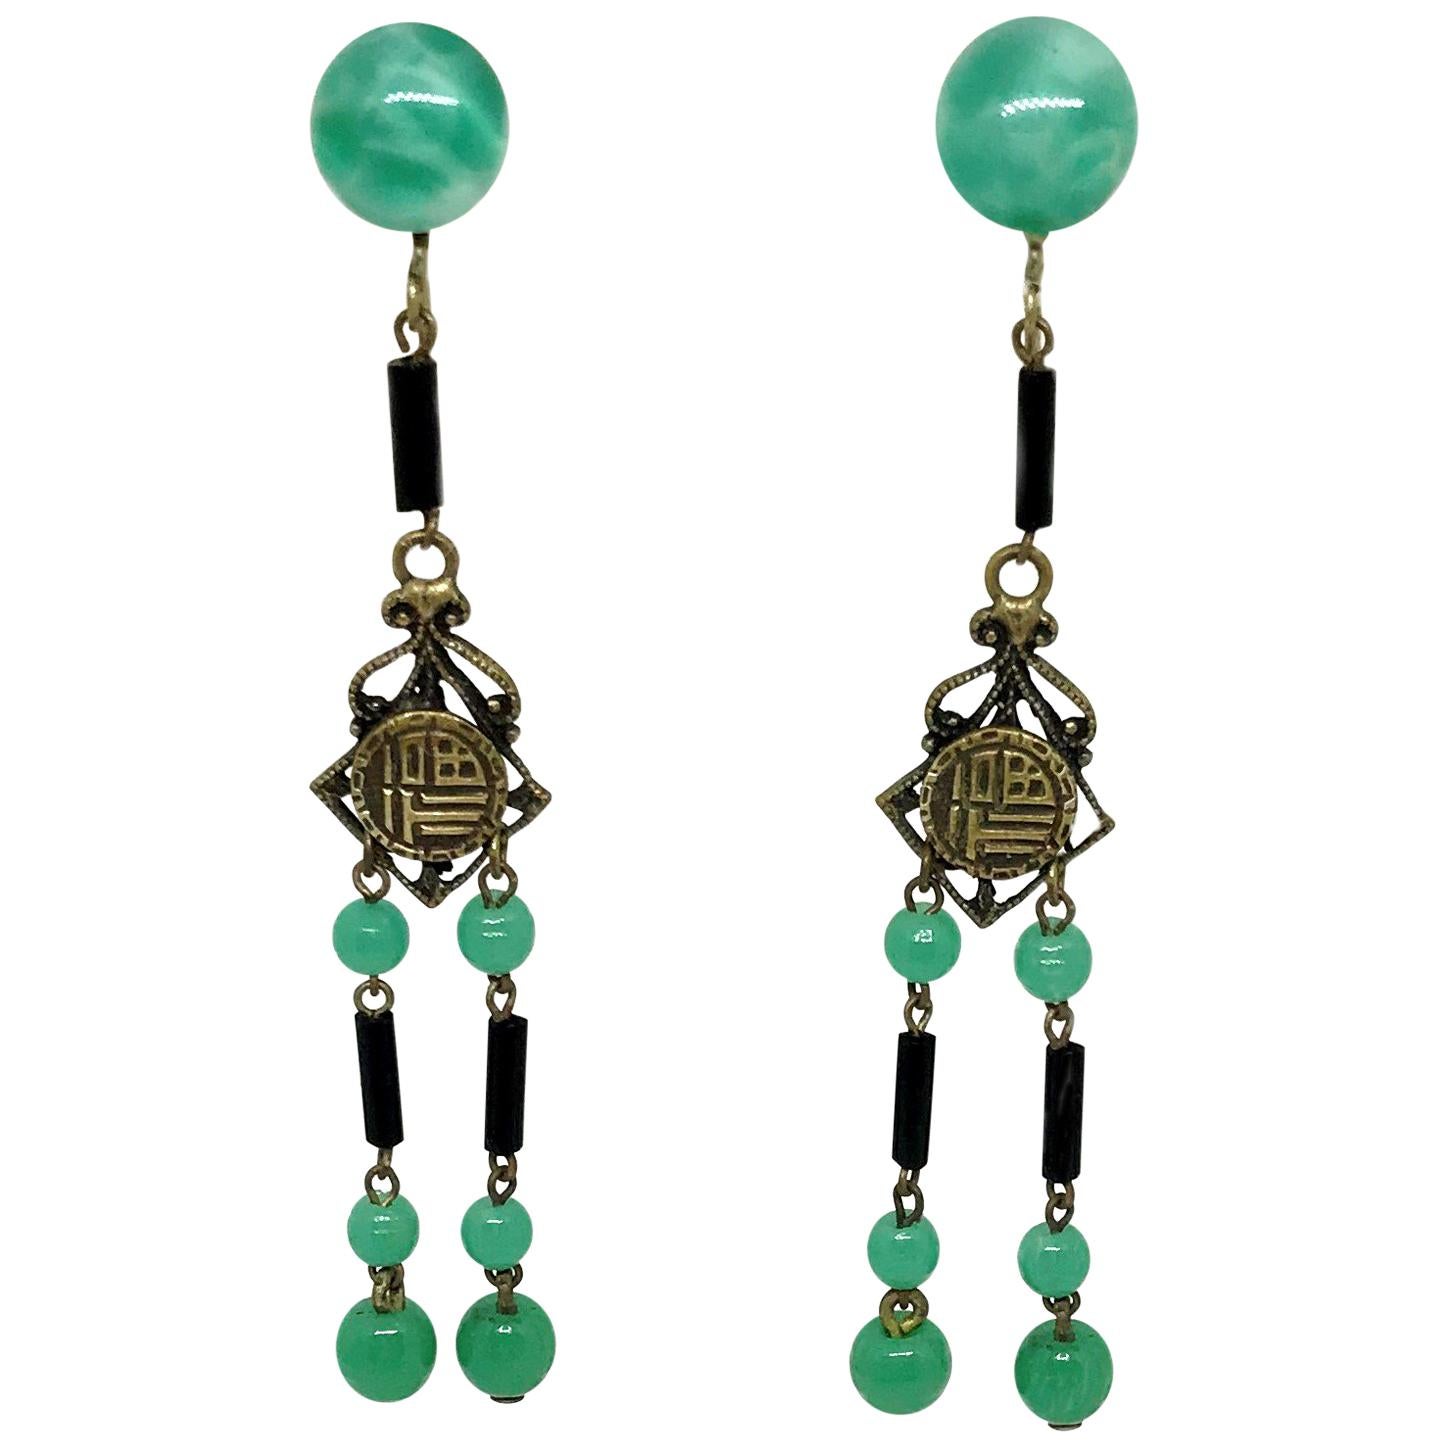 Circa 1920s Peking Glass and Brass Dangling Earrings For Sale